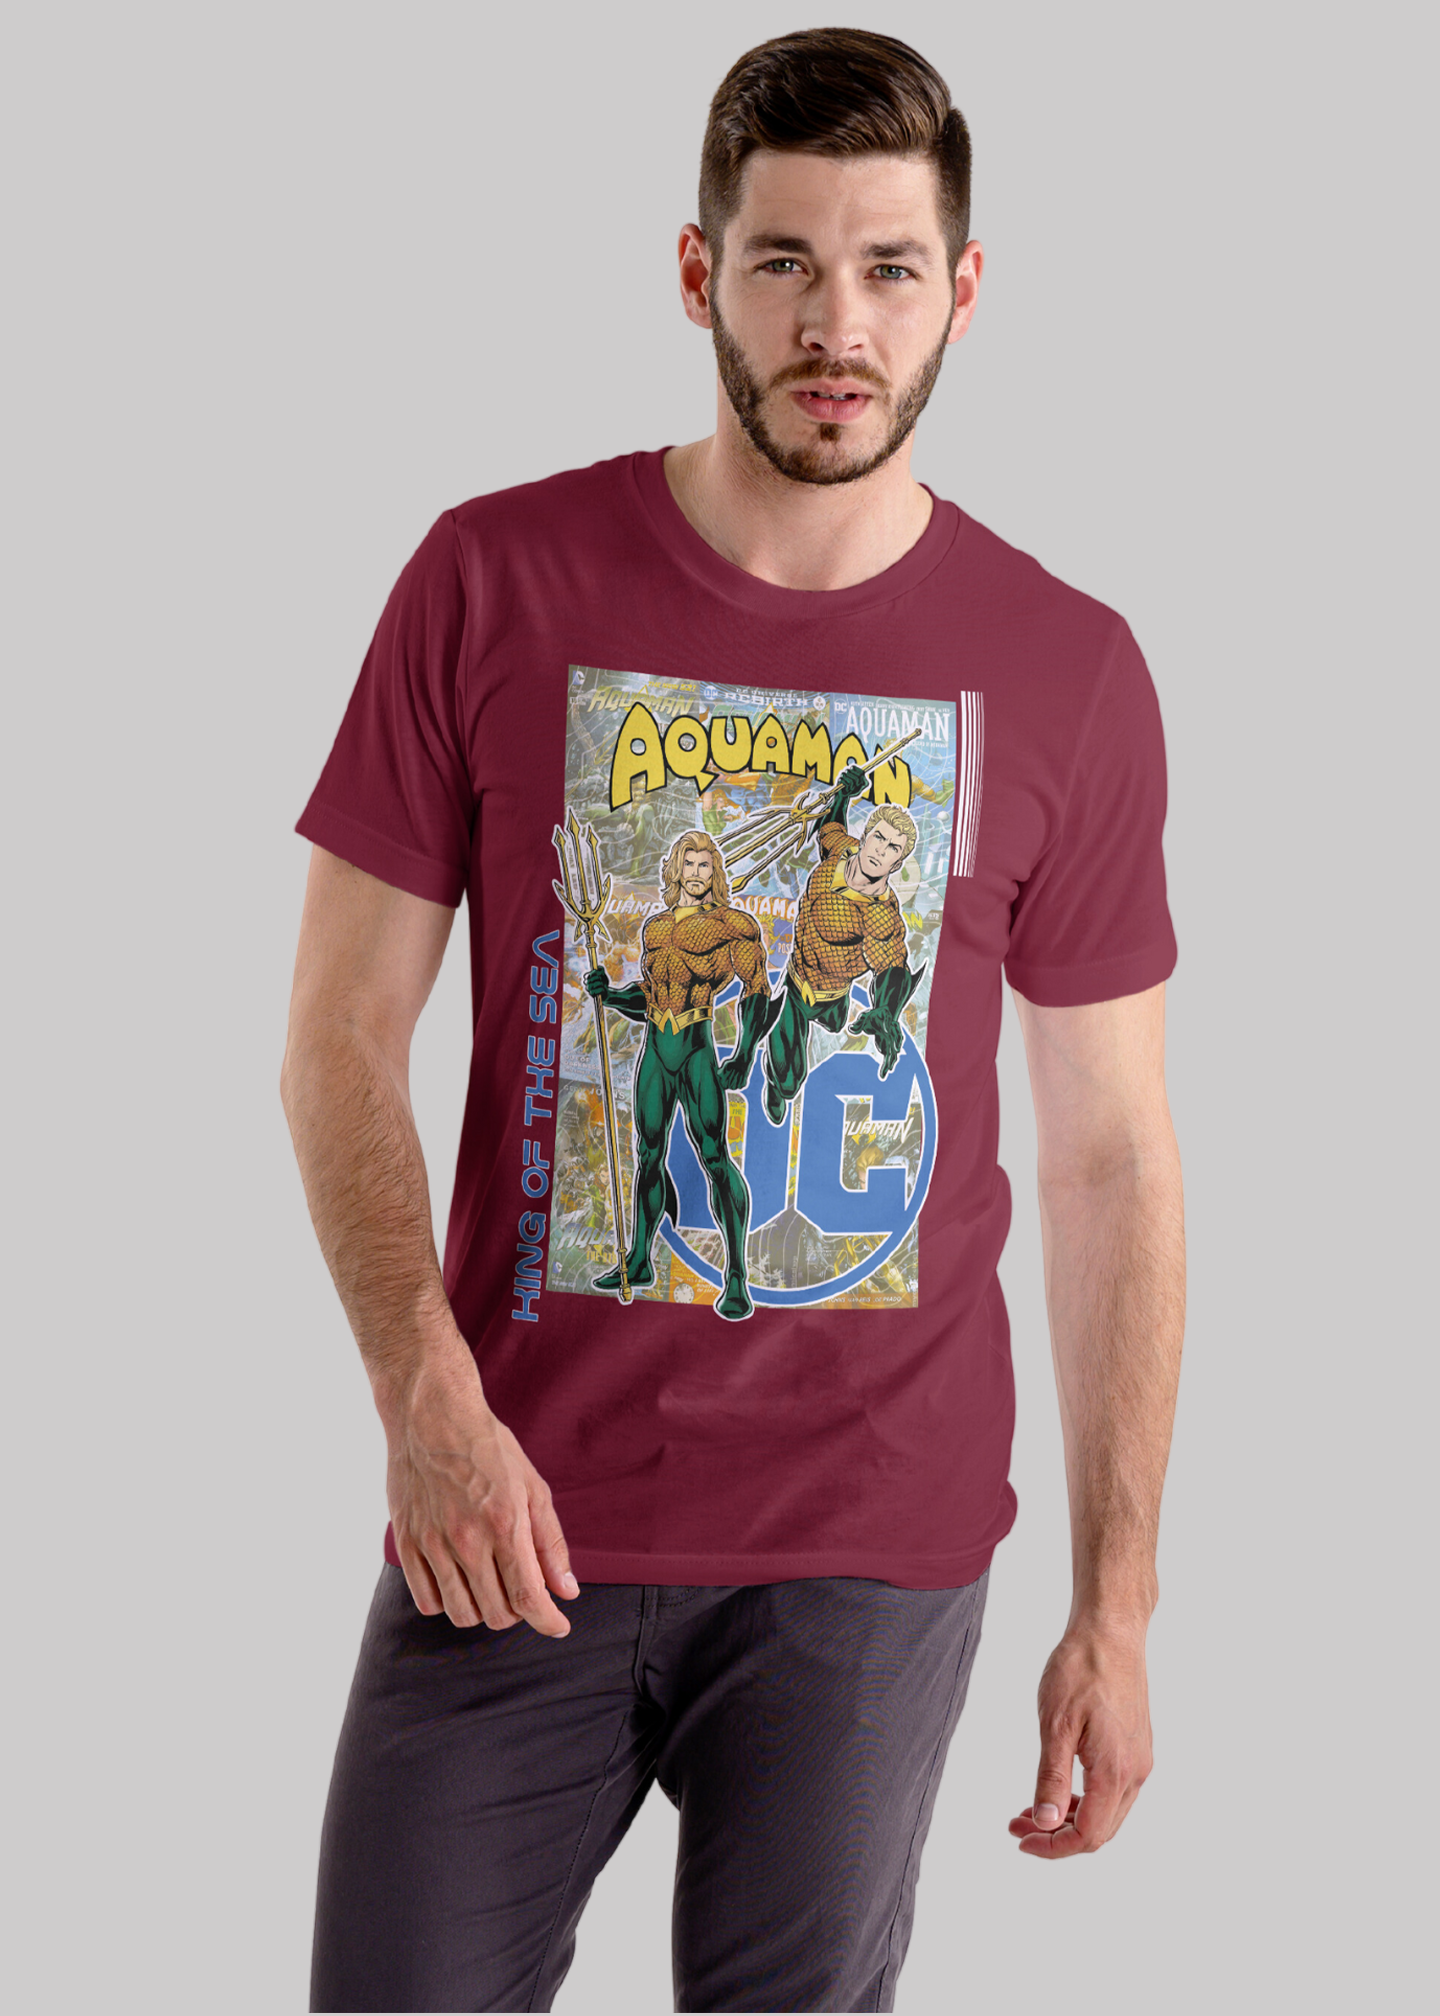 Aquaman Printed Half Sleeve Premium Cotton T-shirt For Men